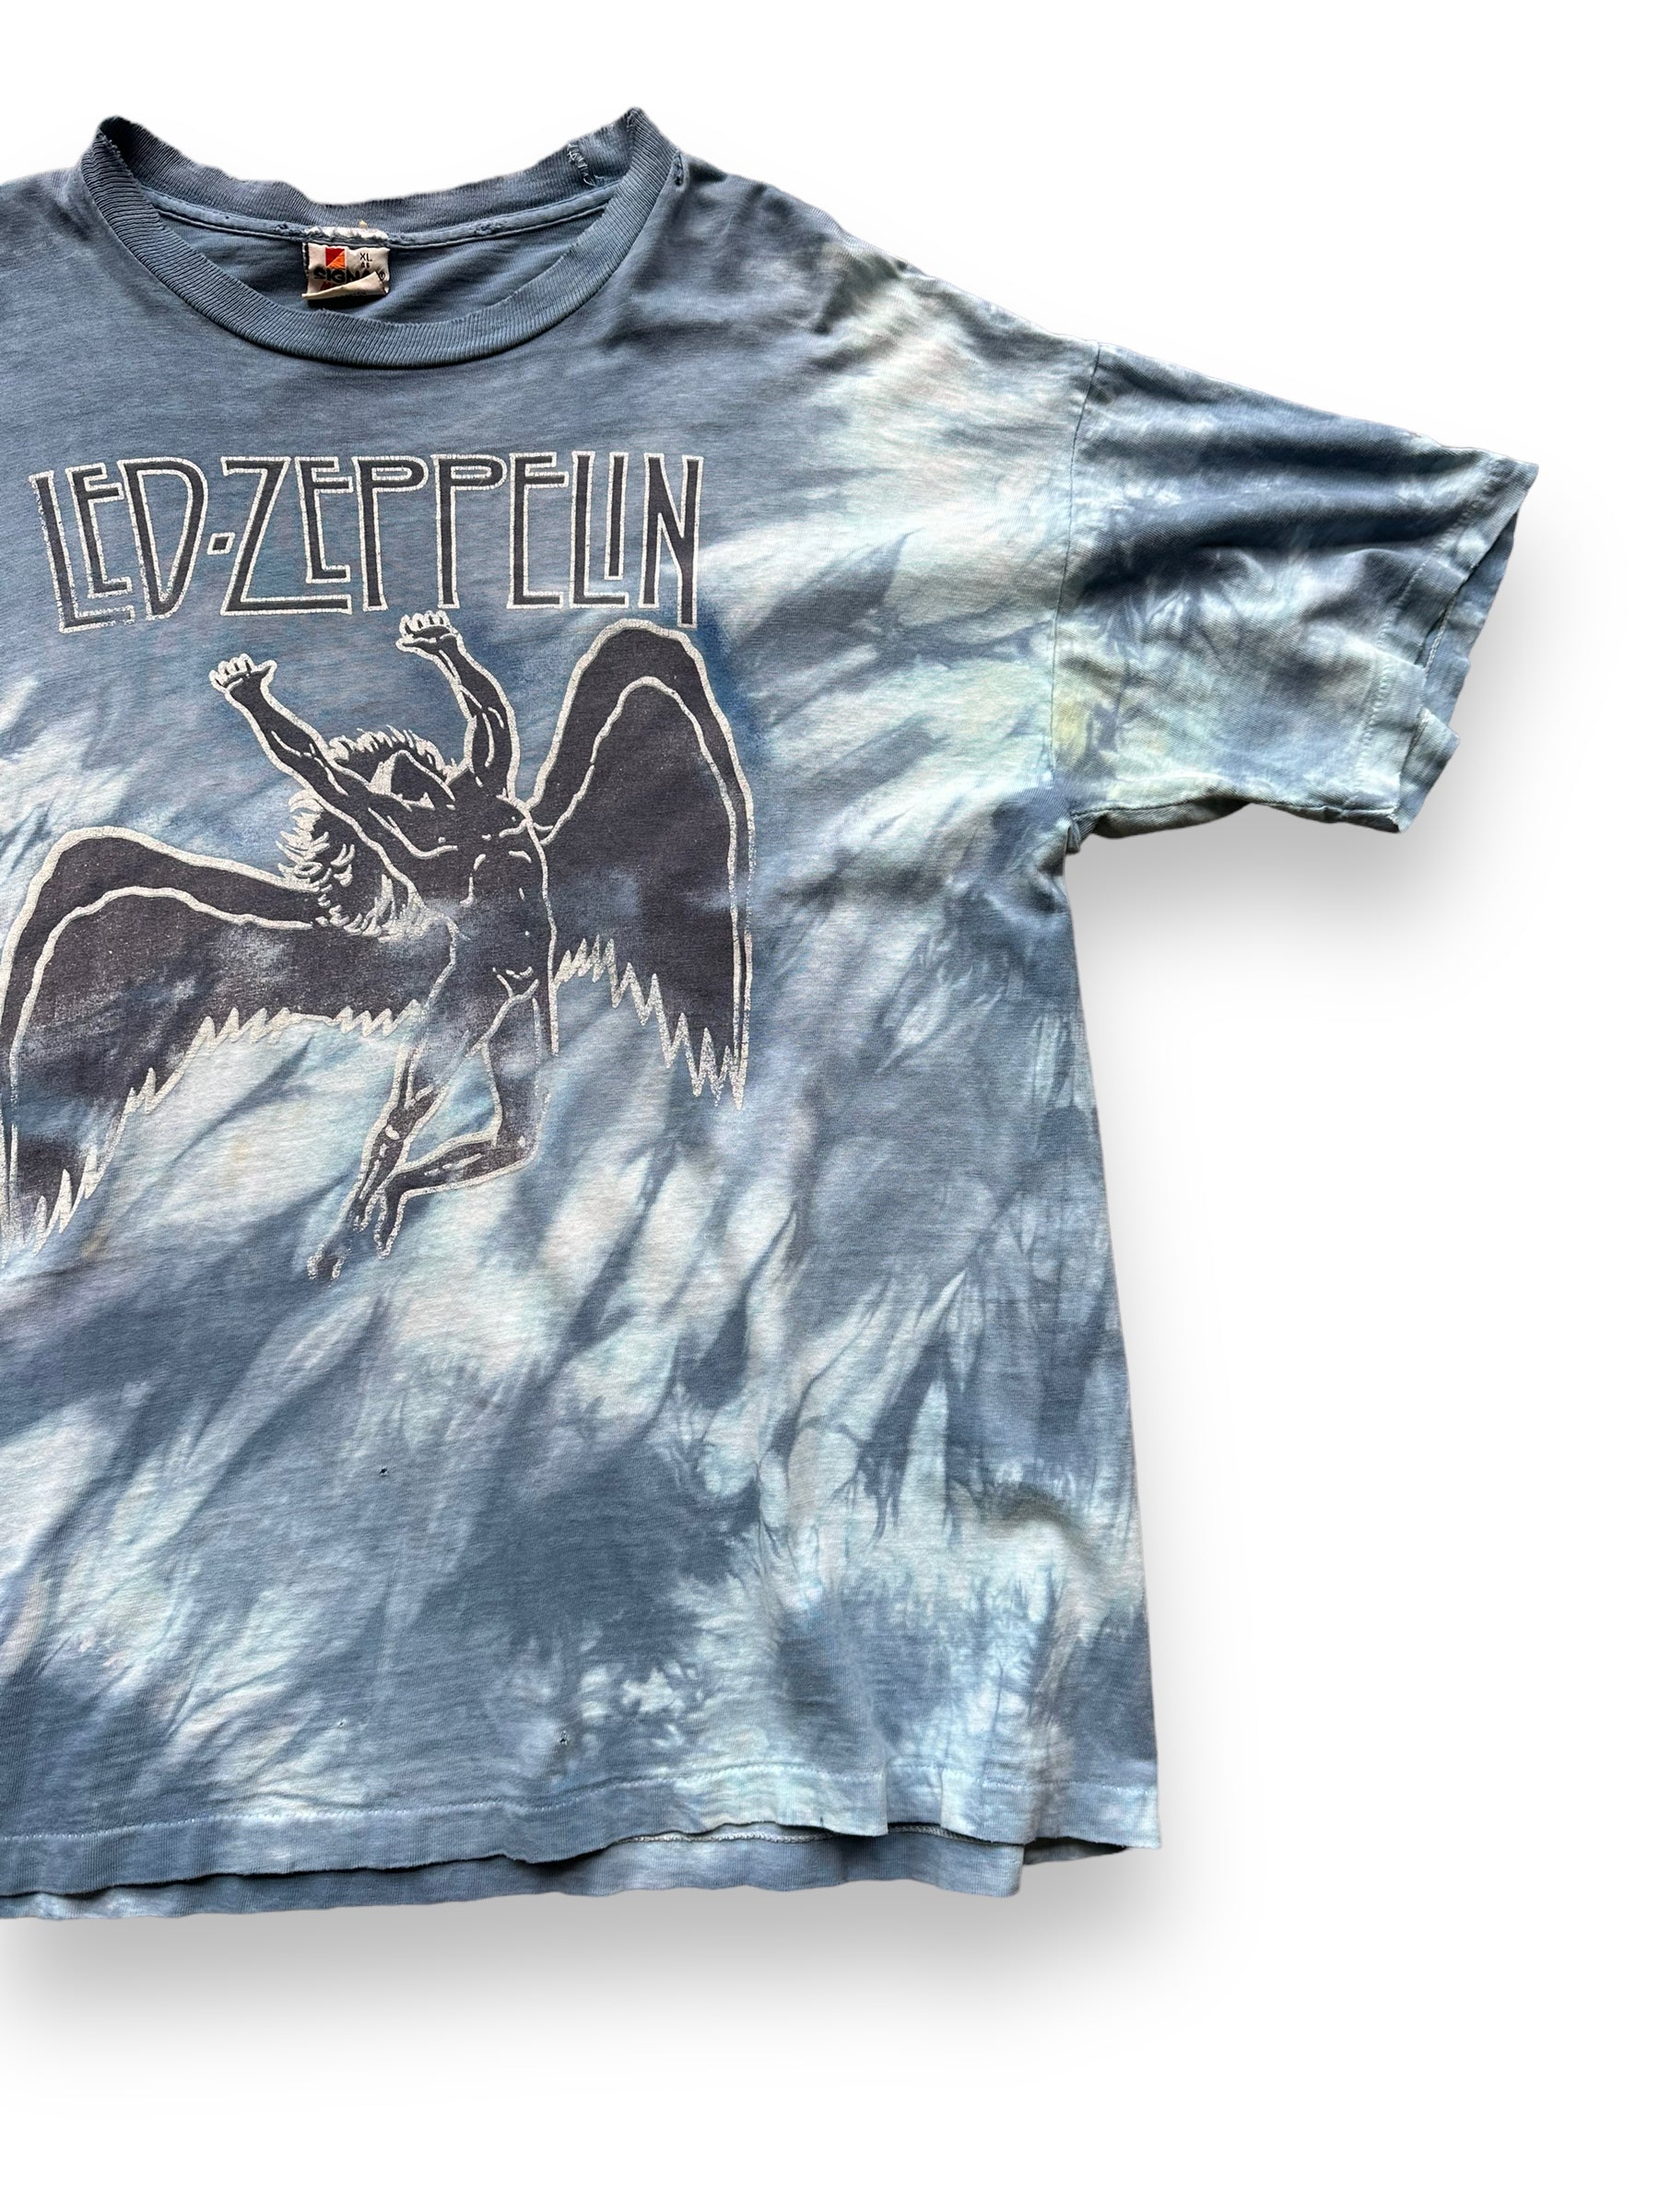 Front Left View of Vintage Led Zeppelin Tie Dye Tee SZ XL |  Vintage Single Stitch Rock Tee Seattle | Barn Owl Vintage